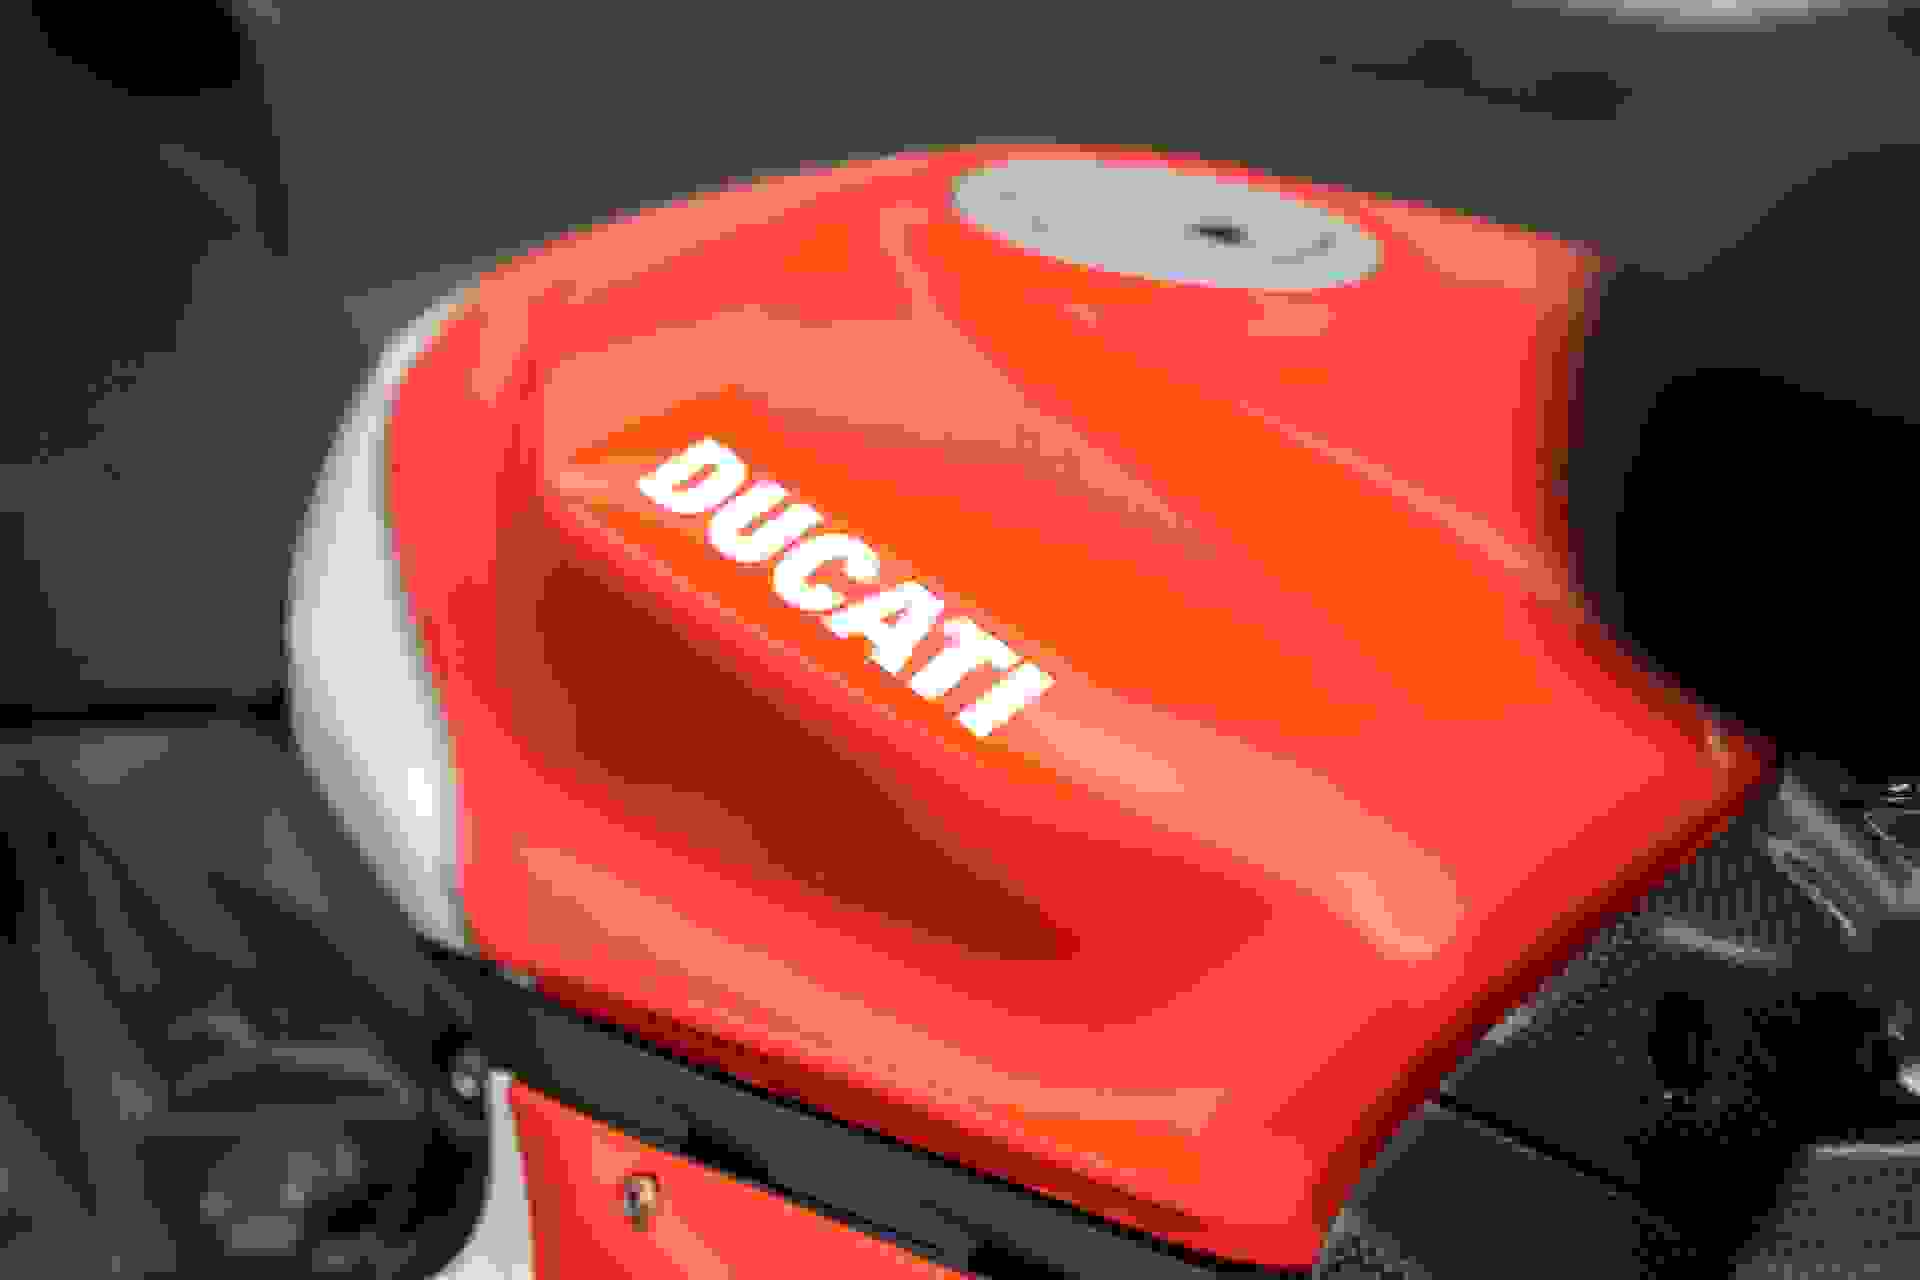 Ducati Superleggera Photo 06410b3b-3d81-4e7d-a14c-ae4b1e81db3e.jpg